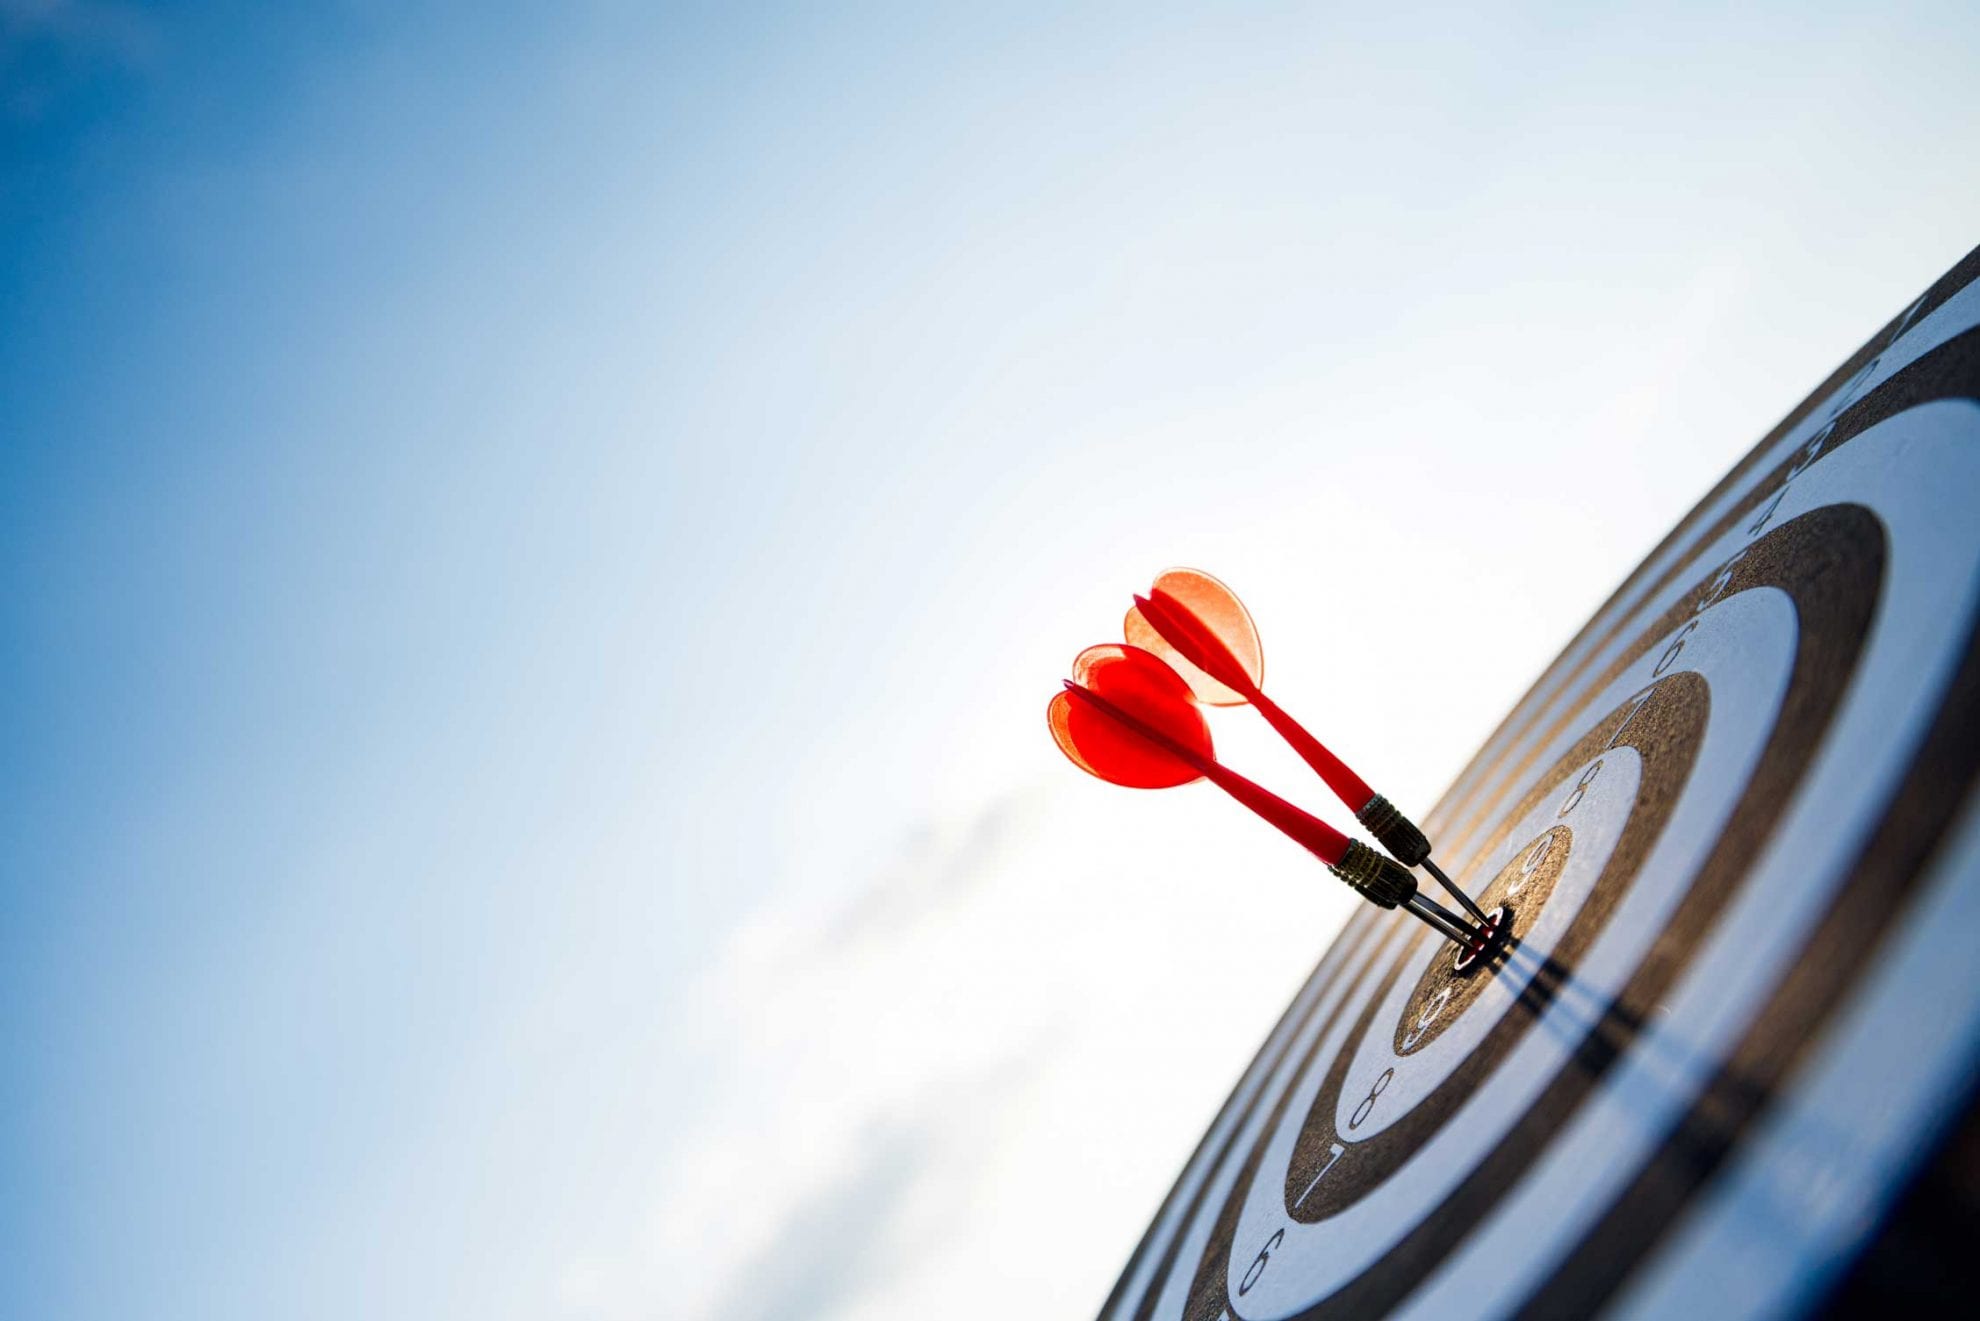 shot-red-darts-arrows-target-center-business-target-goal-success-concept